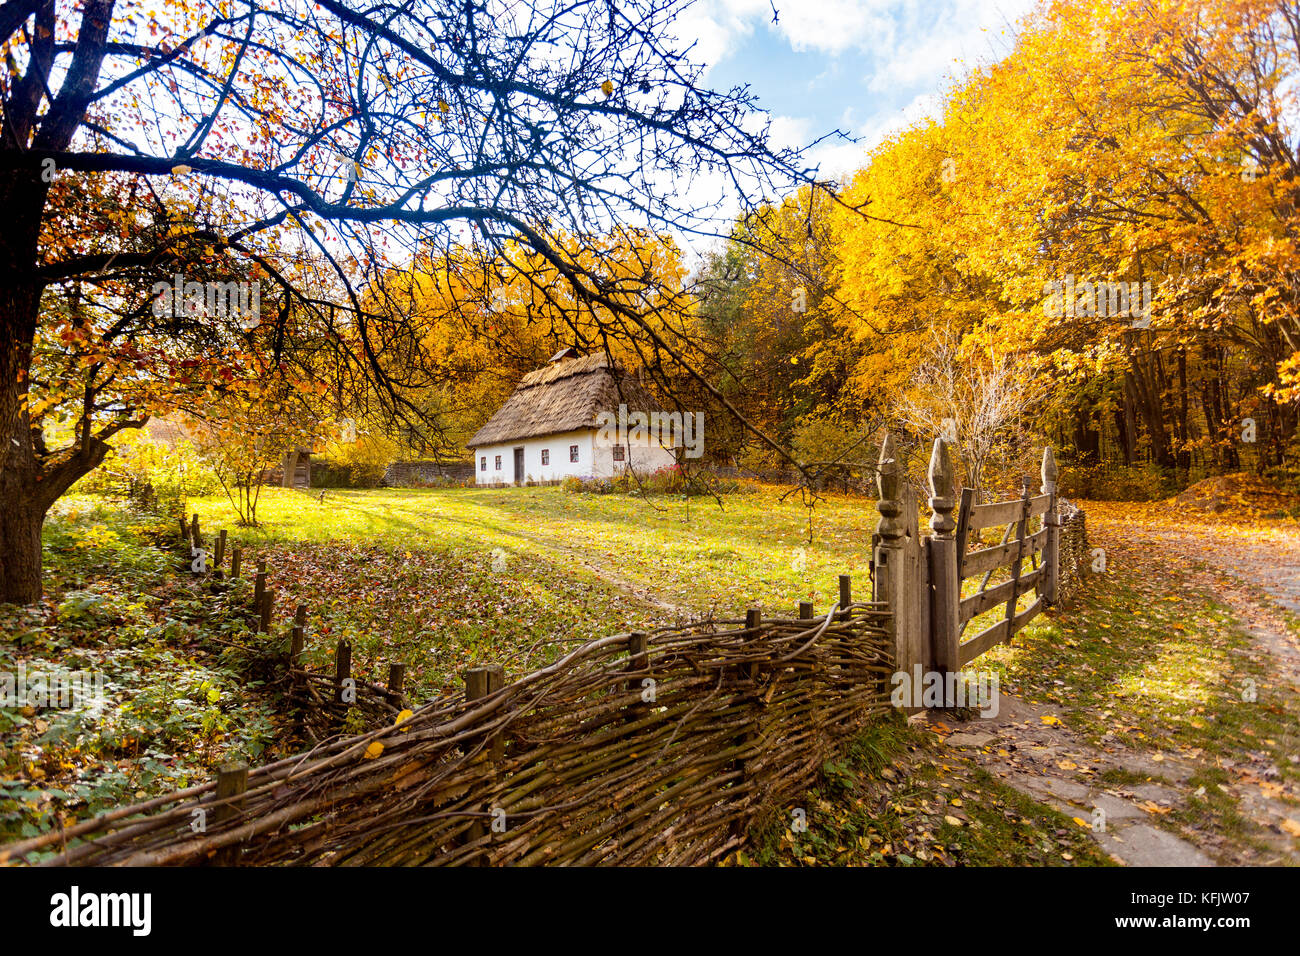 Traditionelle alte Ethno House. Herbst, Herbst Konzept. Foto im Wald oder Park, Outdoor geschossen. Stockfoto